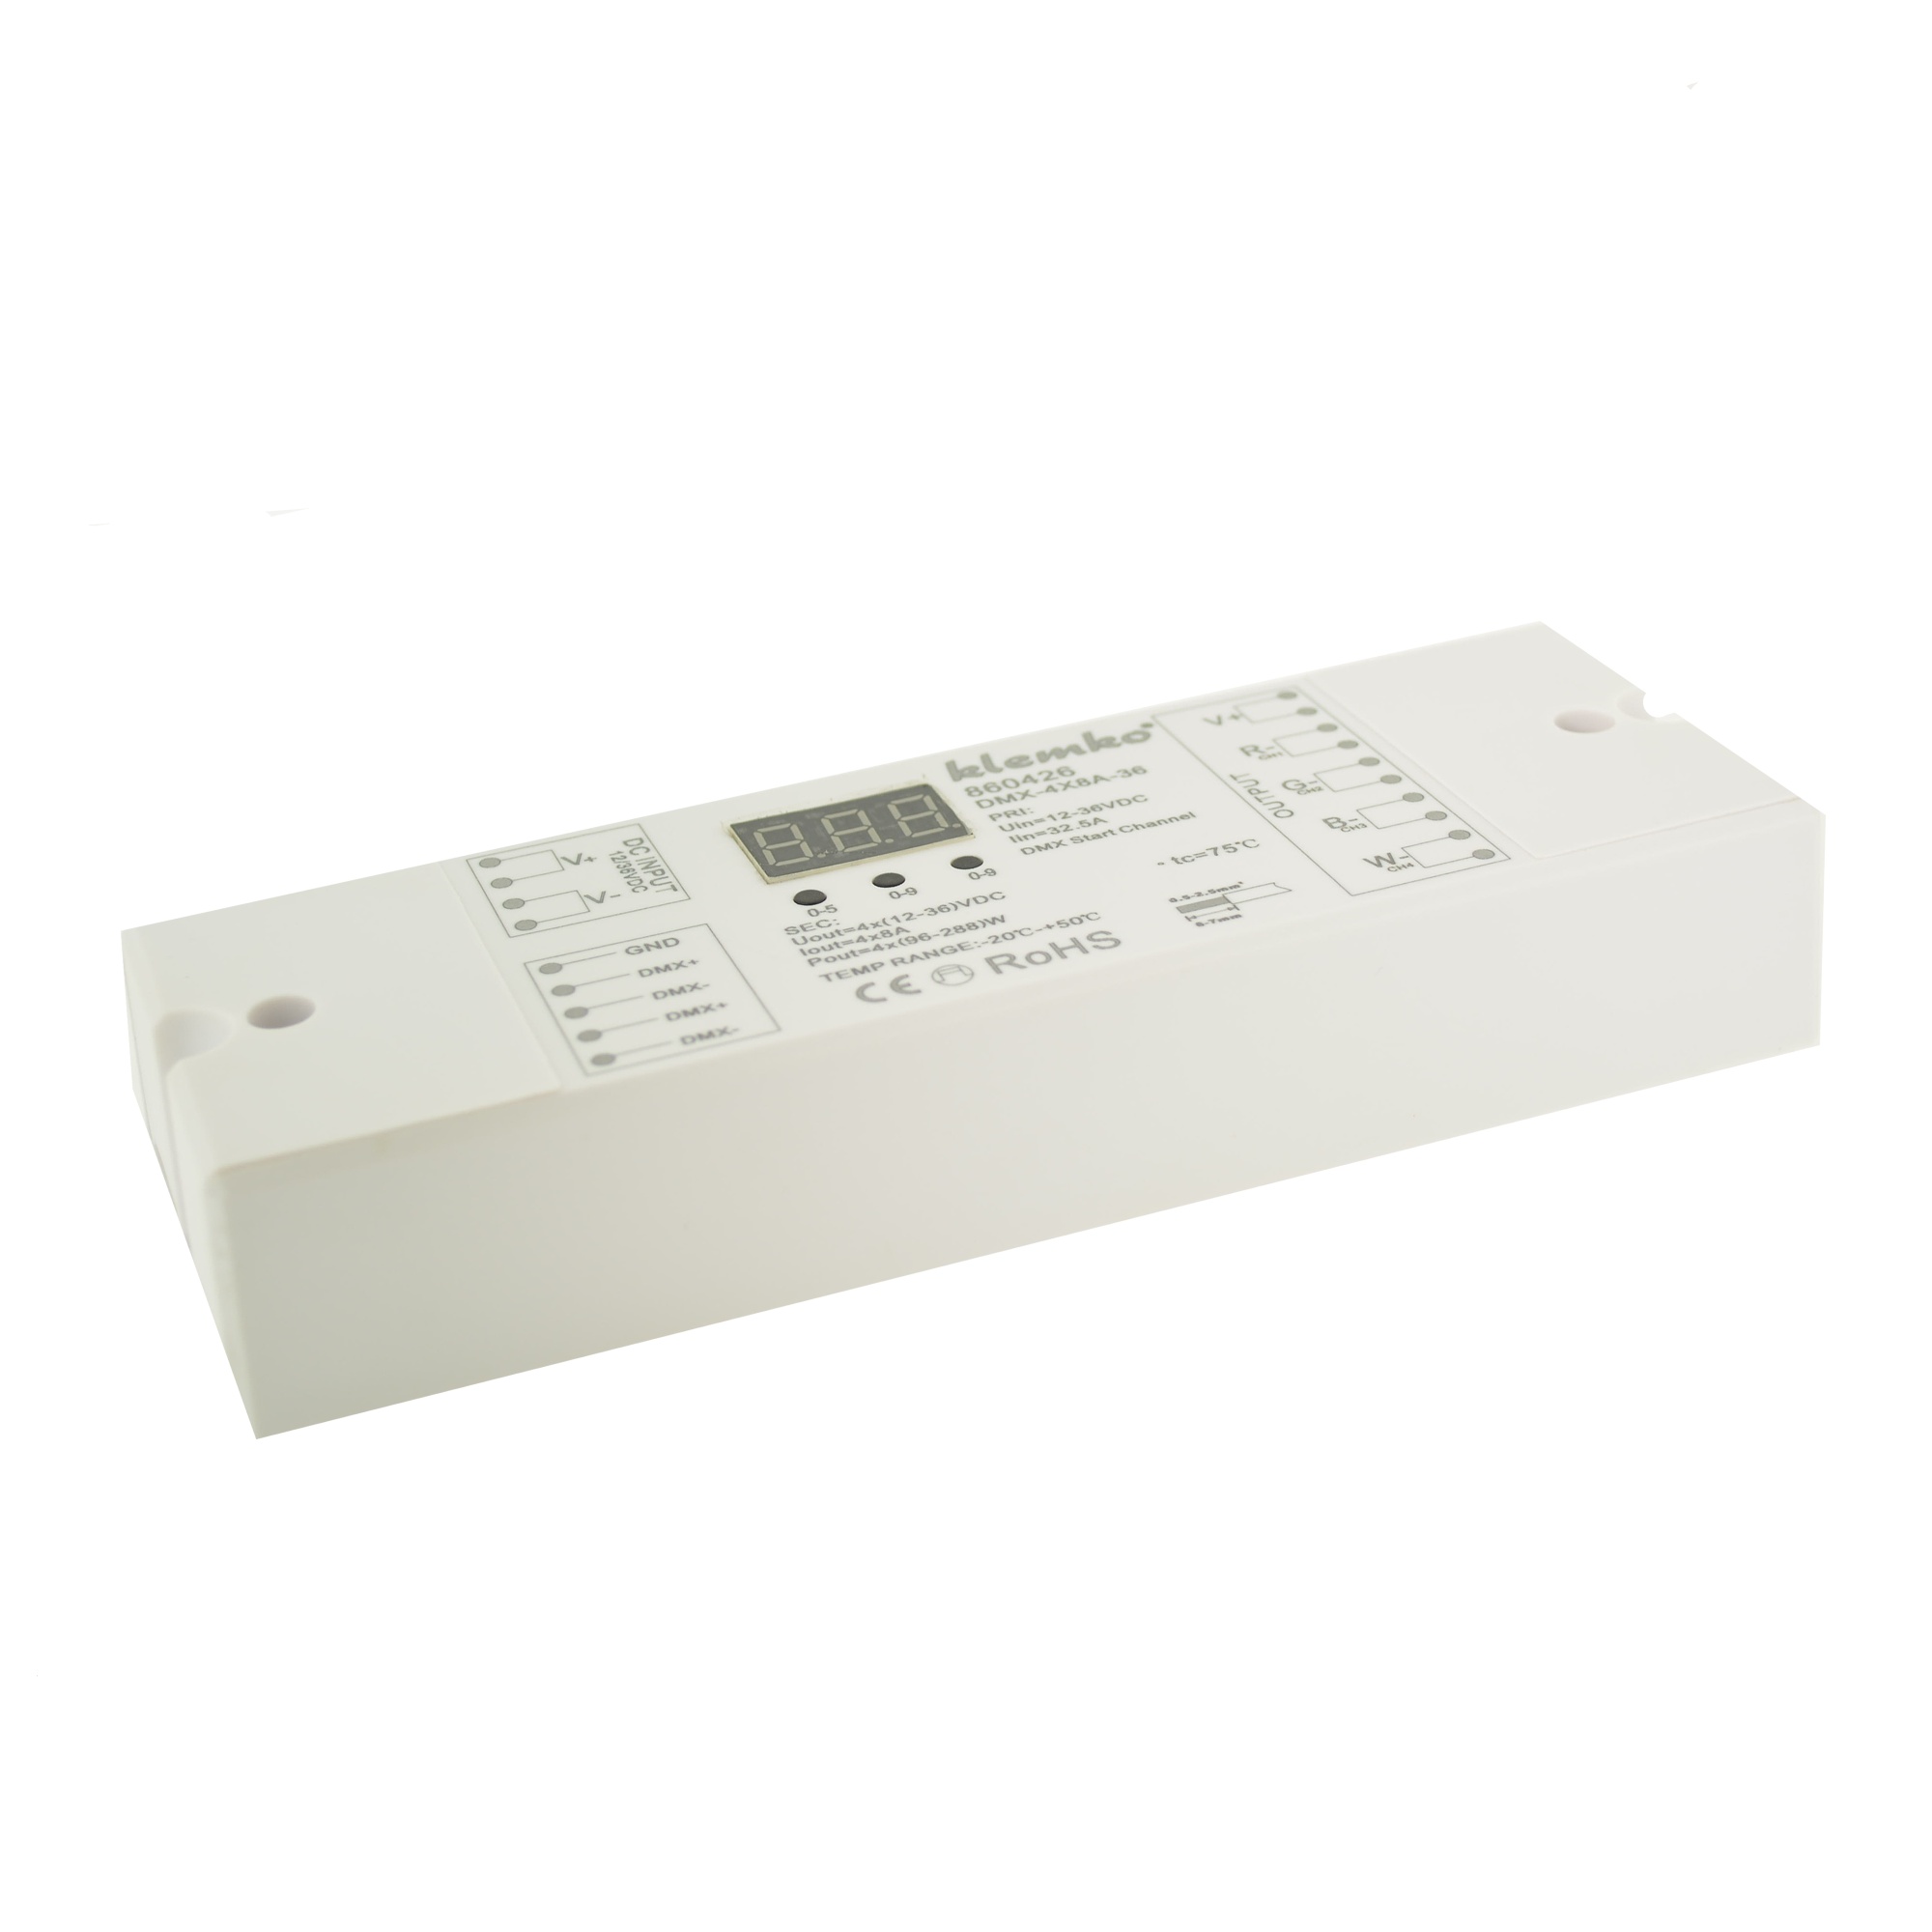 KLEMKO 860426 Kleurcontroller voor Led DMX-4X8A-36 DMX controller 4 x 8Ampere constant voltage uitgang